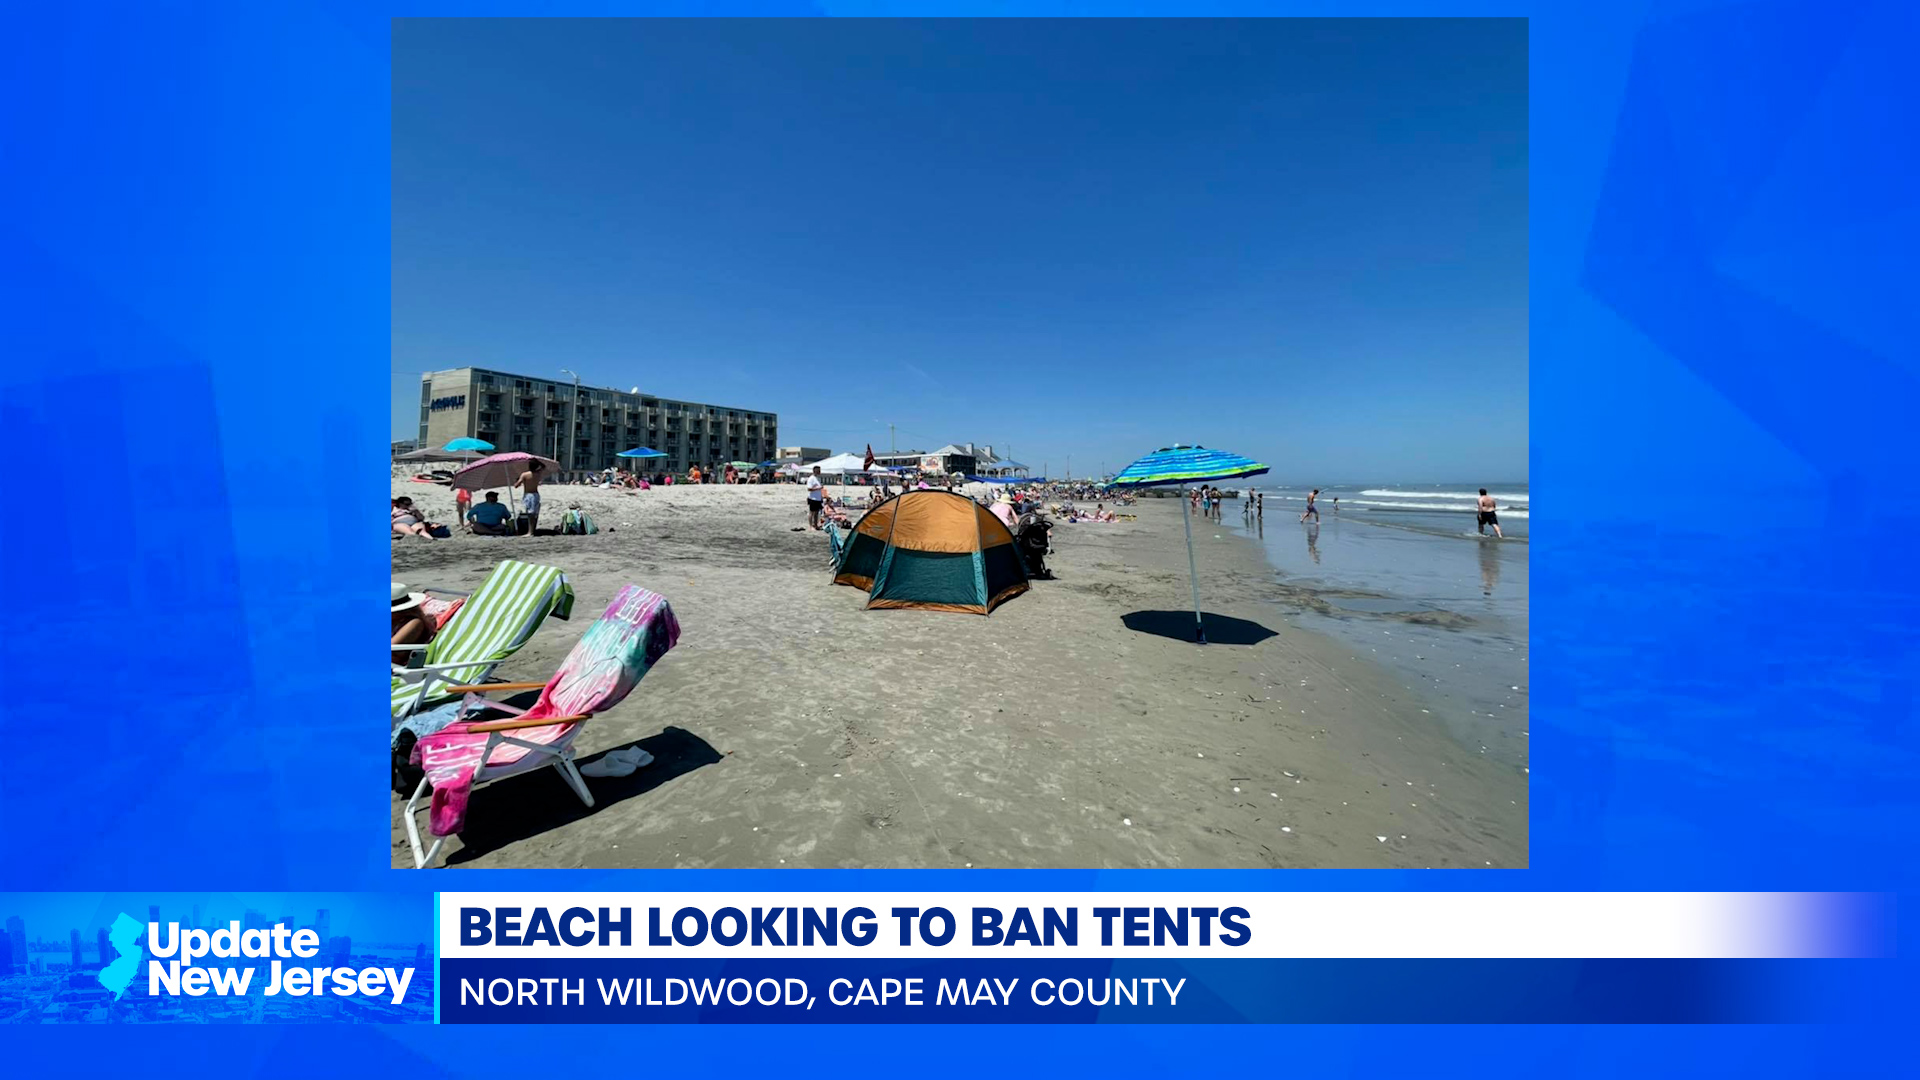 News Update: Beaches Banning Tents